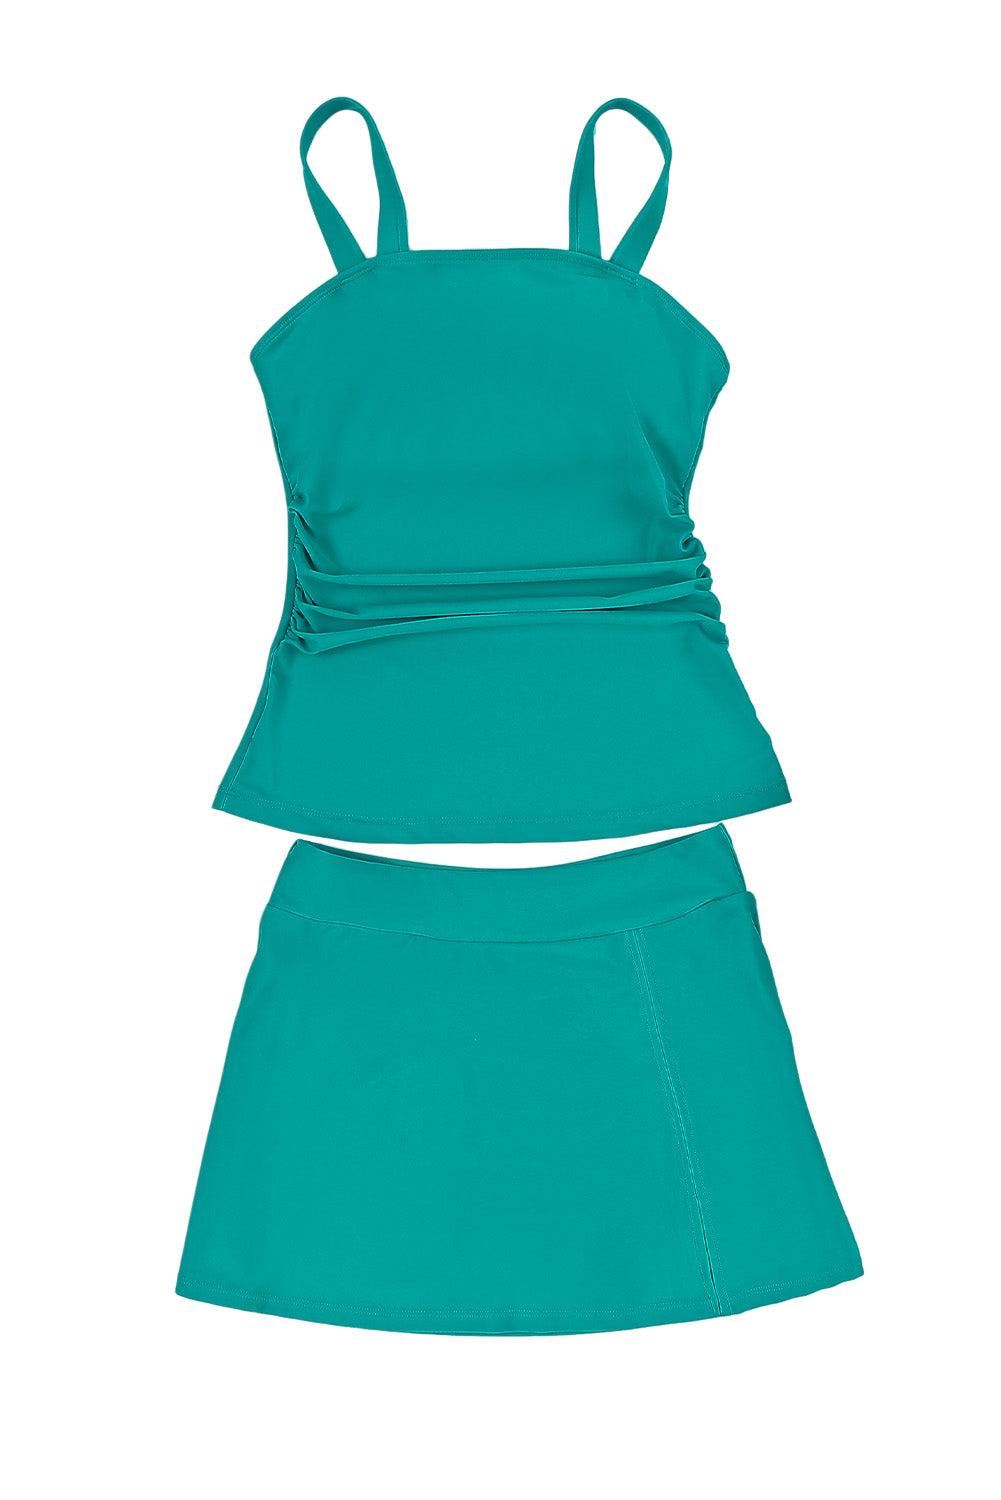 Green Solid Square Neck Sleeveless Tankini Swimsuit - L & M Kee, LLC